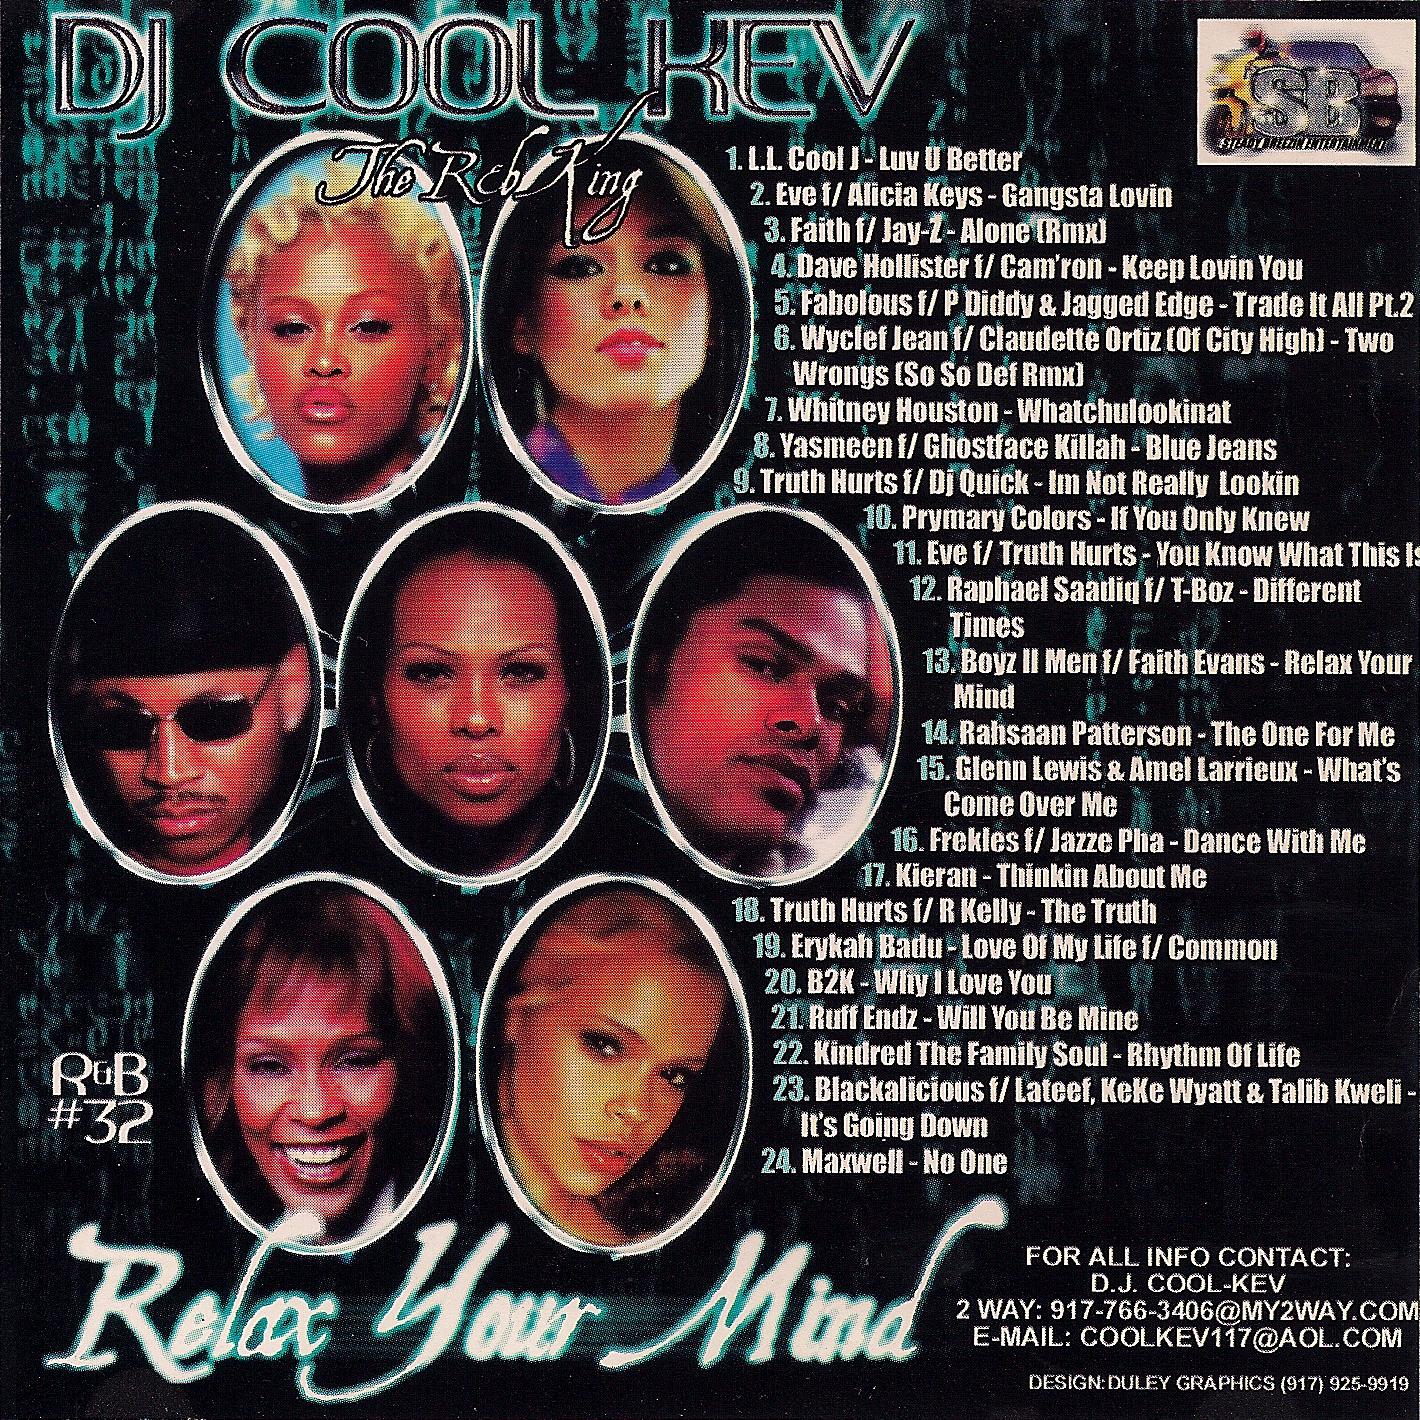 DJ Cool Kev – R&B 32, R&B, RNB, Throwback R&B, Mixtape Downloads, Downloads